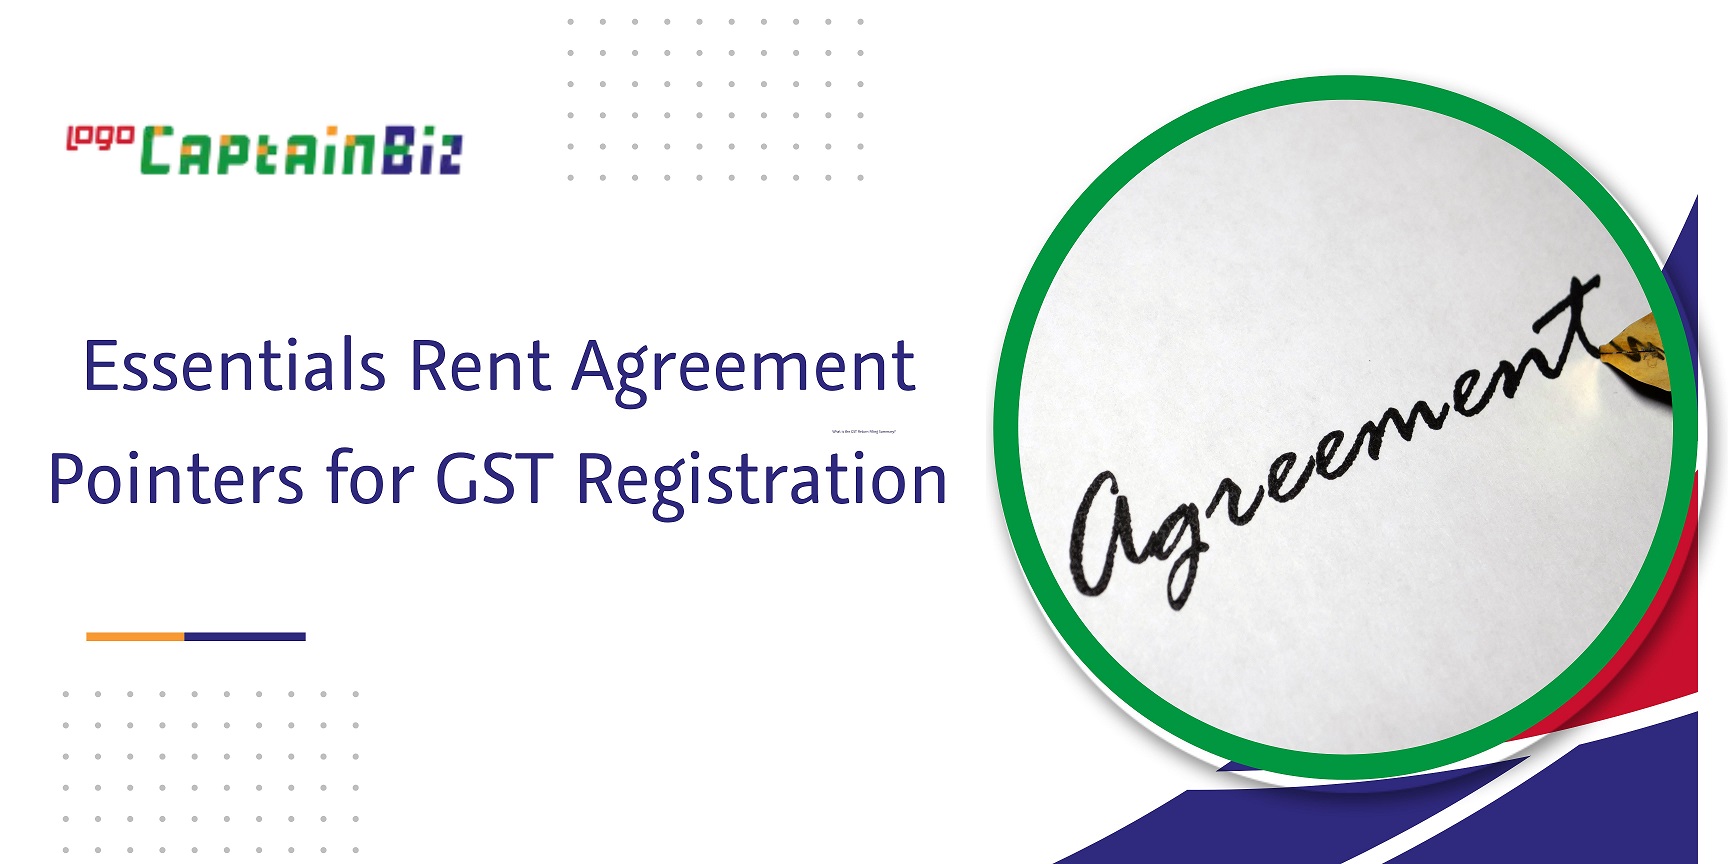 CaptainBiz: essentials rent agreement pointers for gst registration